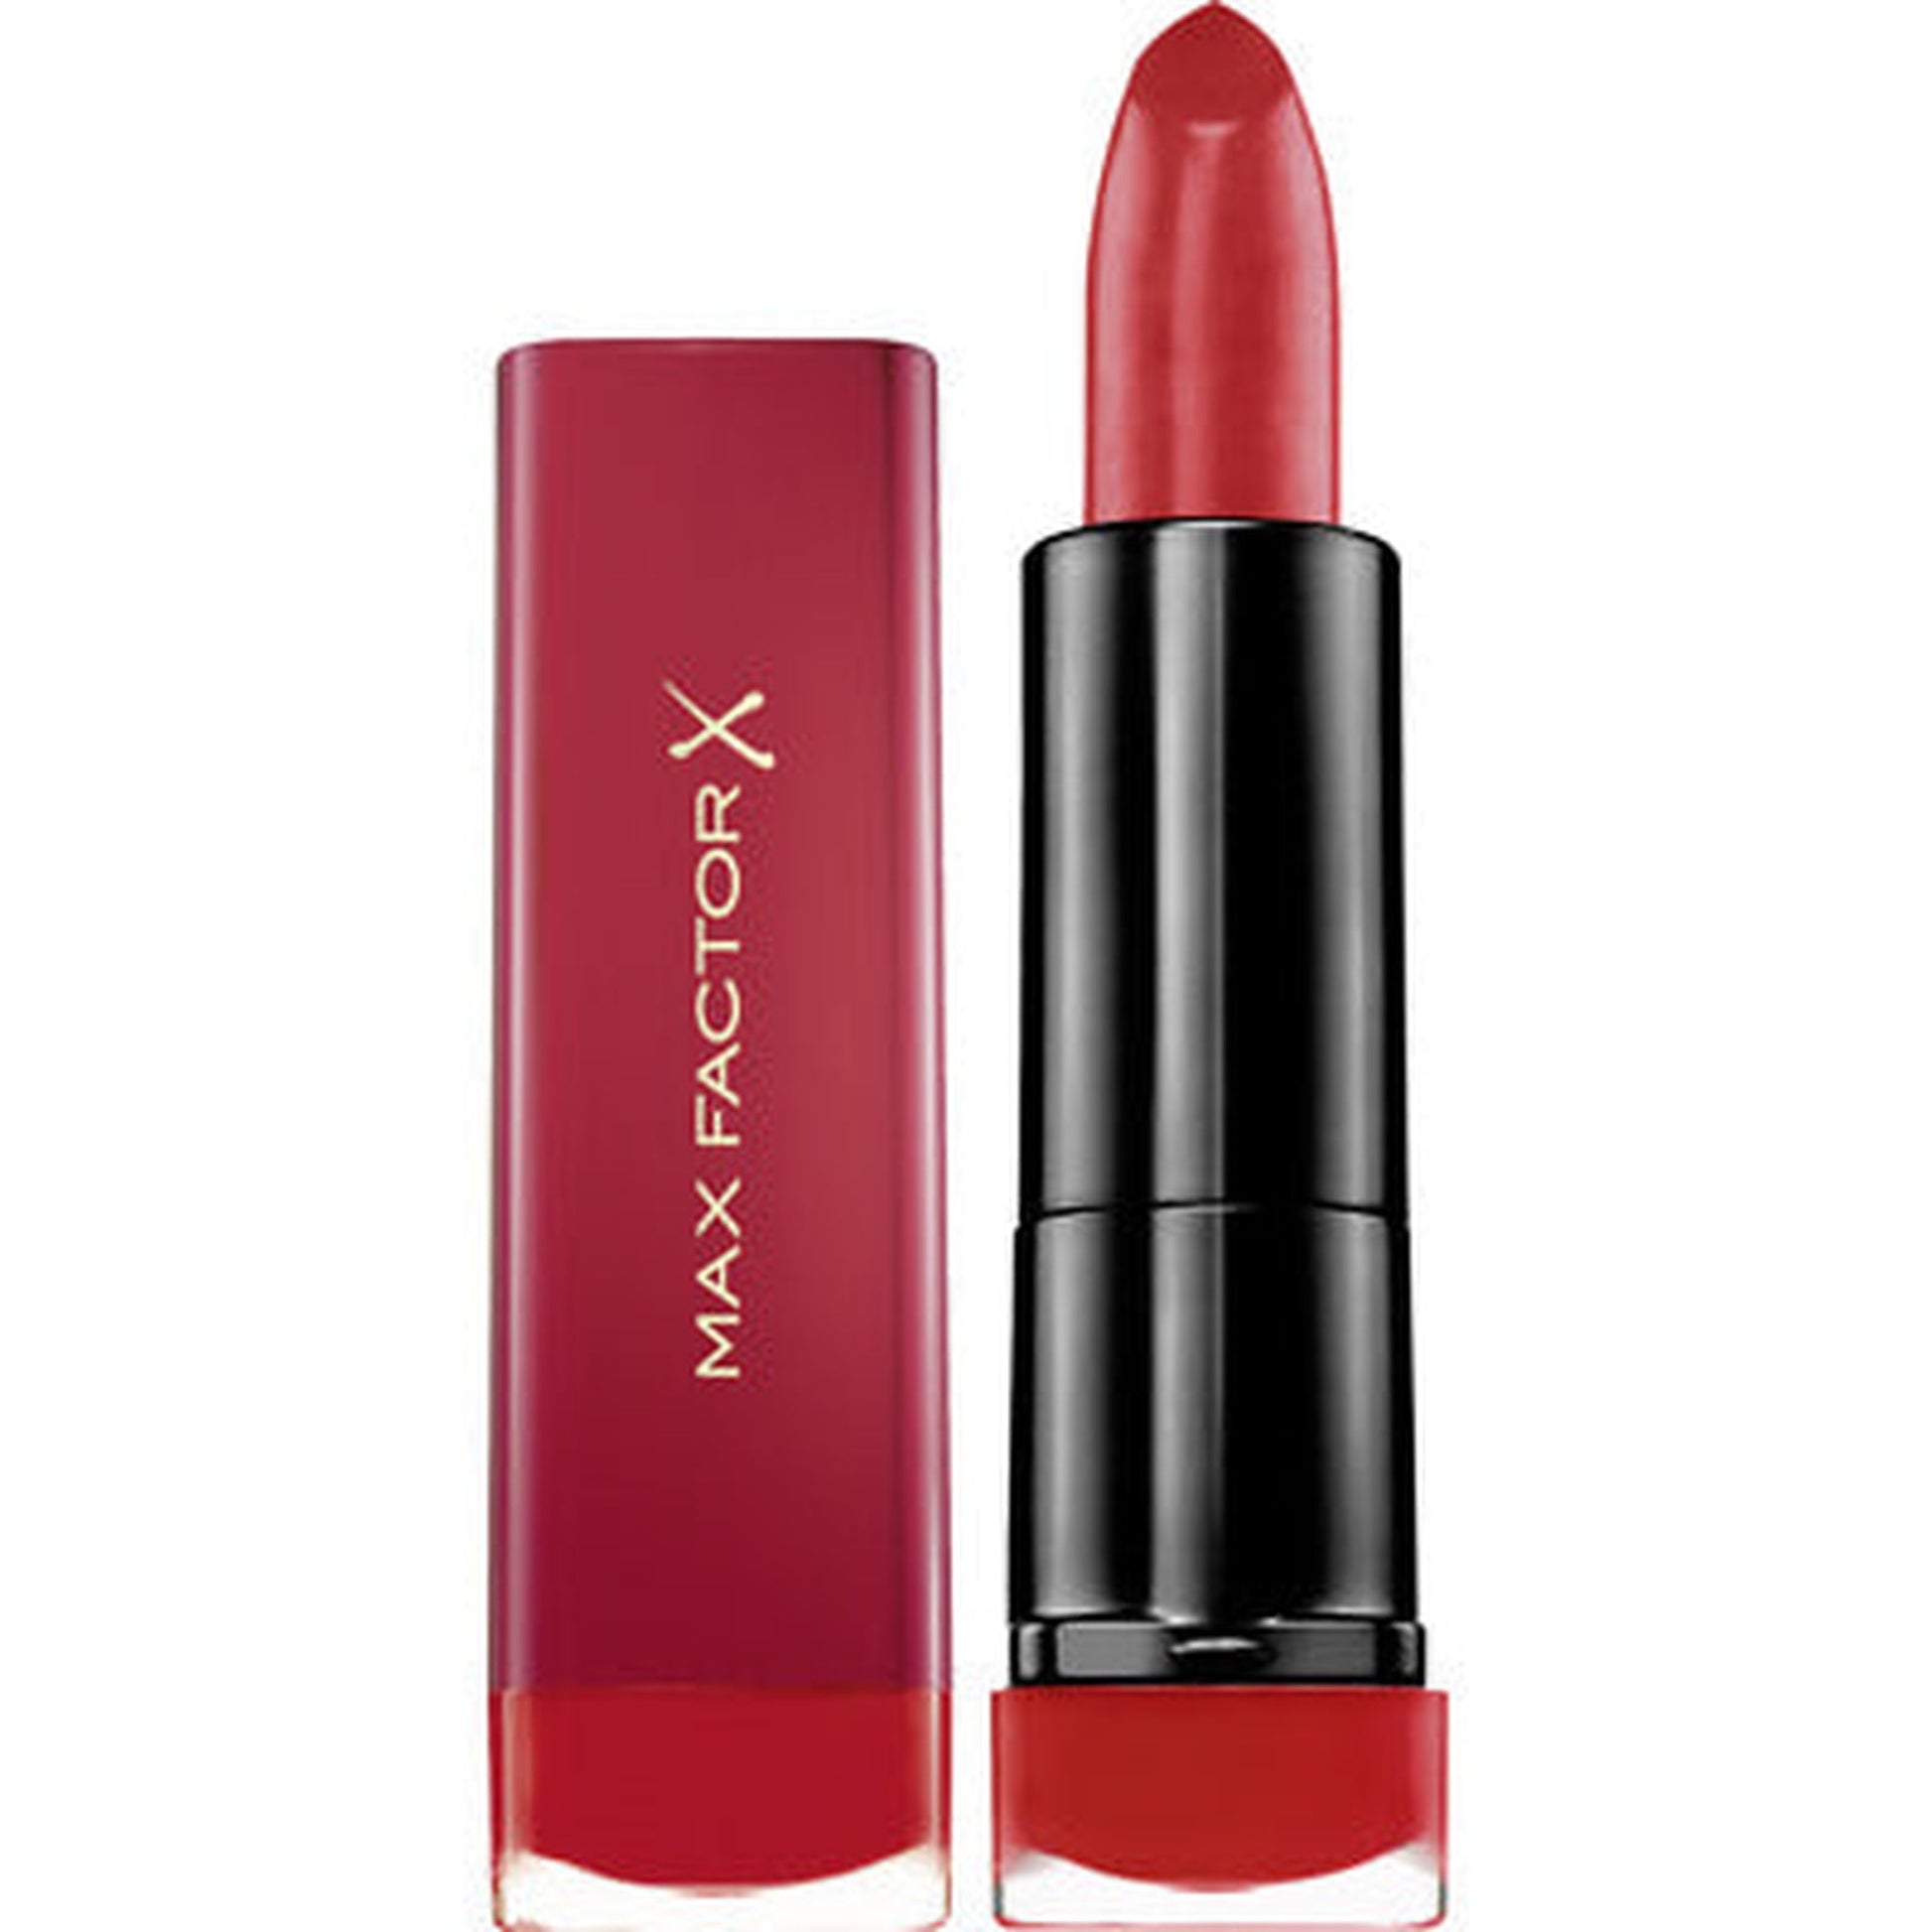 Max Factor Elixir Marilyn Sunset Red Shade 02-Max Factor-BeautyNmakeup.co.uk